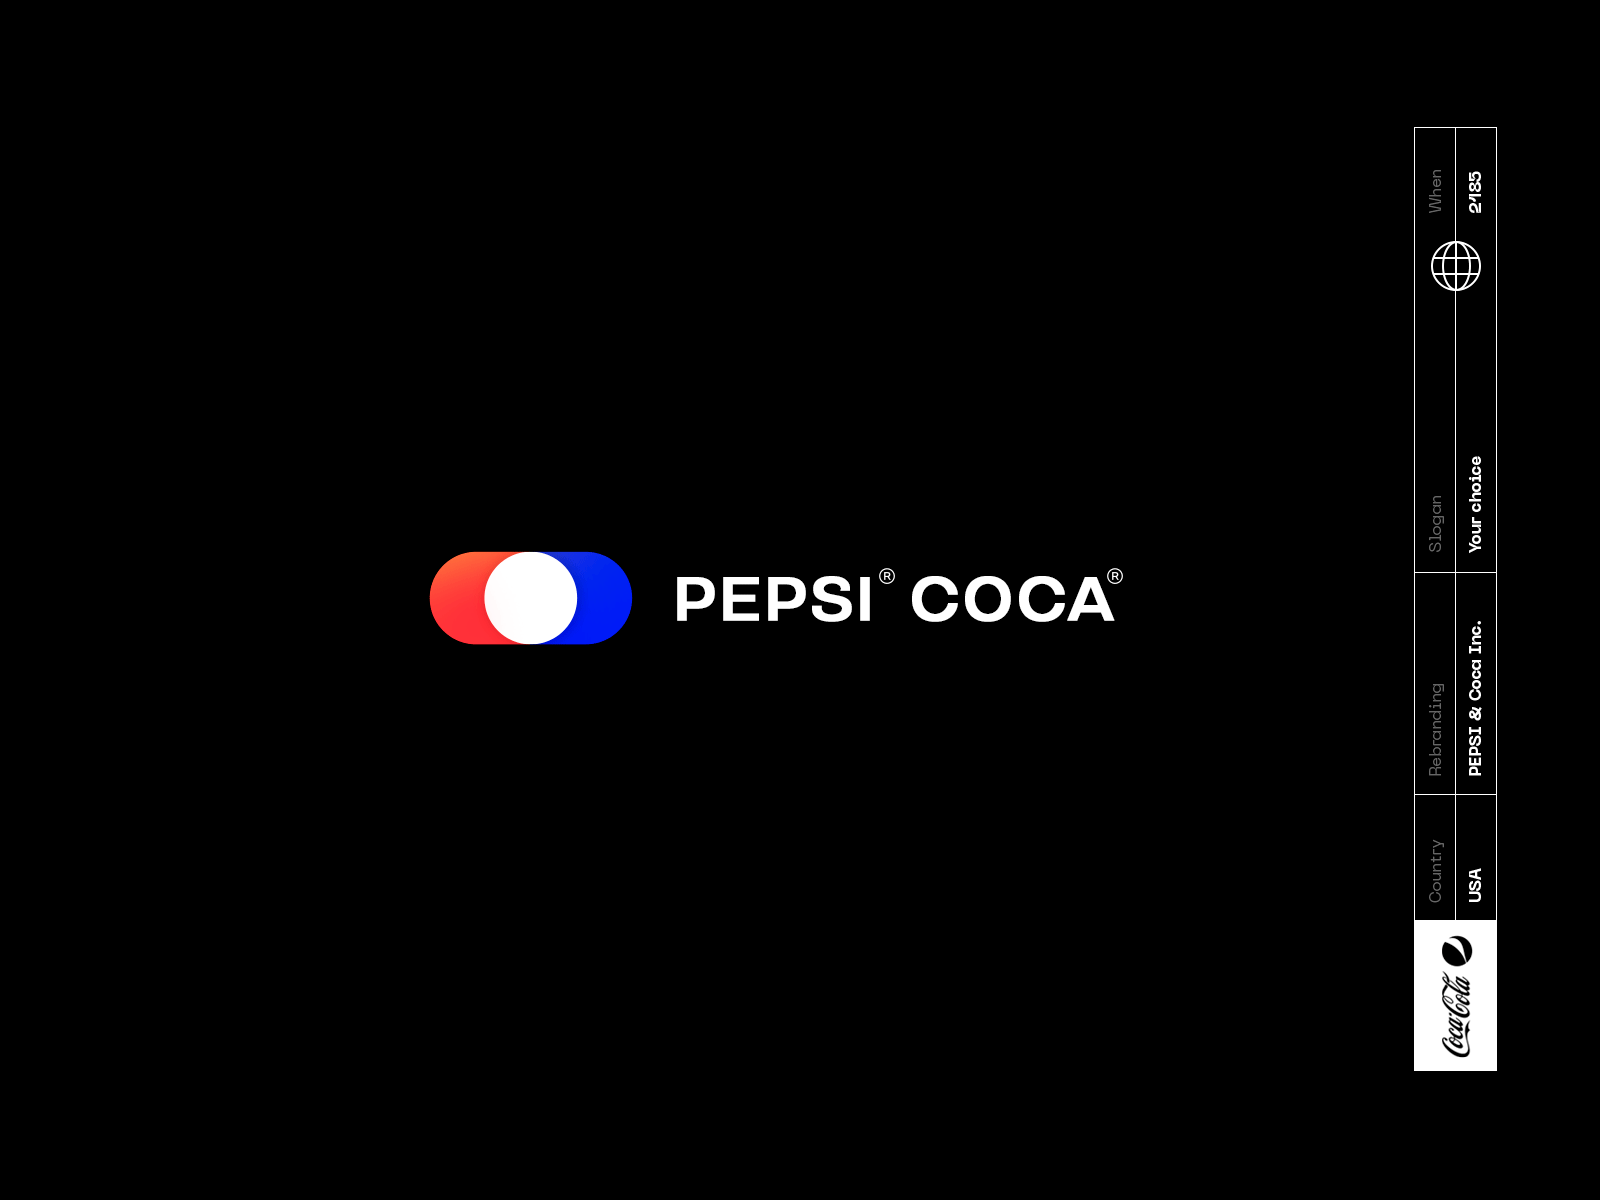 PEPSI® COCA®